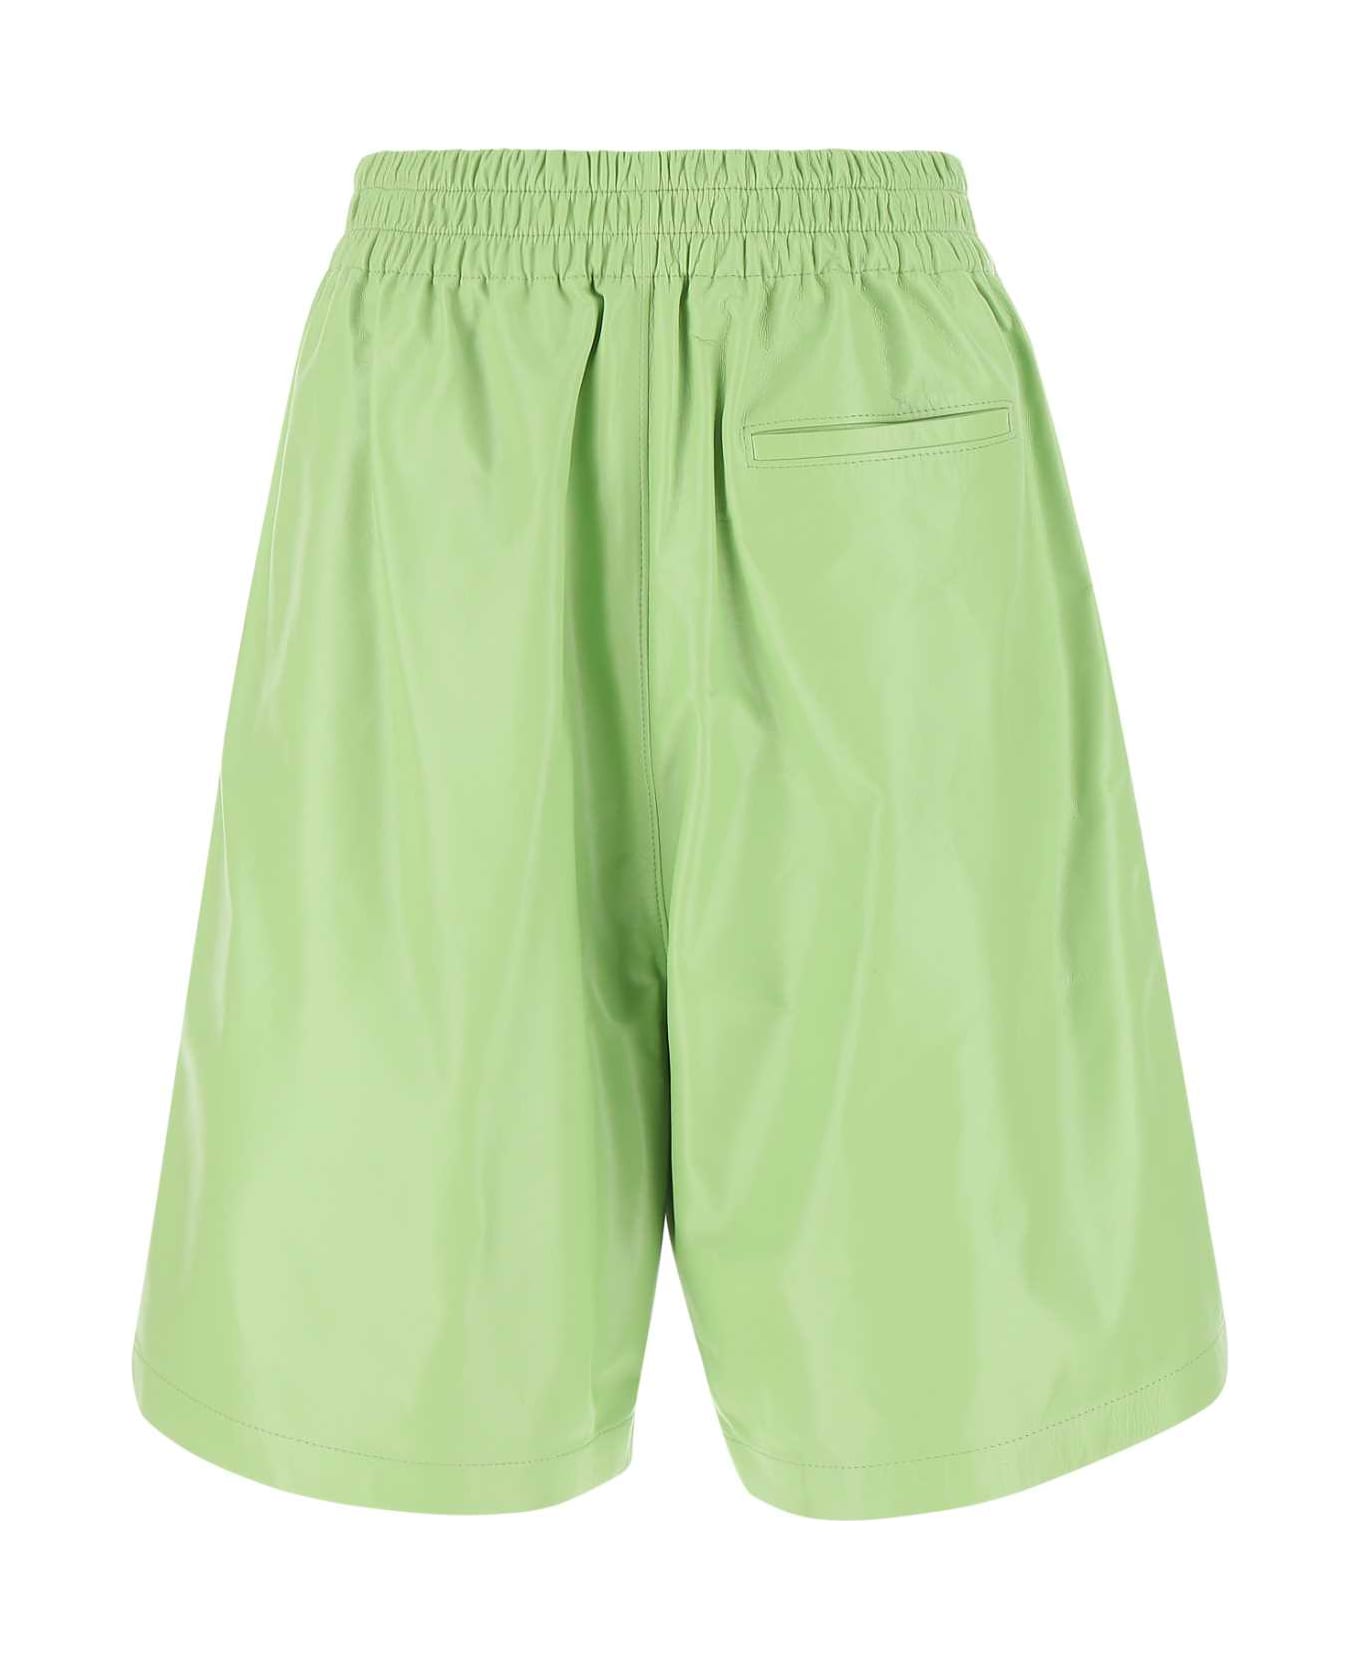 Bottega Veneta Pastel Green Leather Shorts - 3516